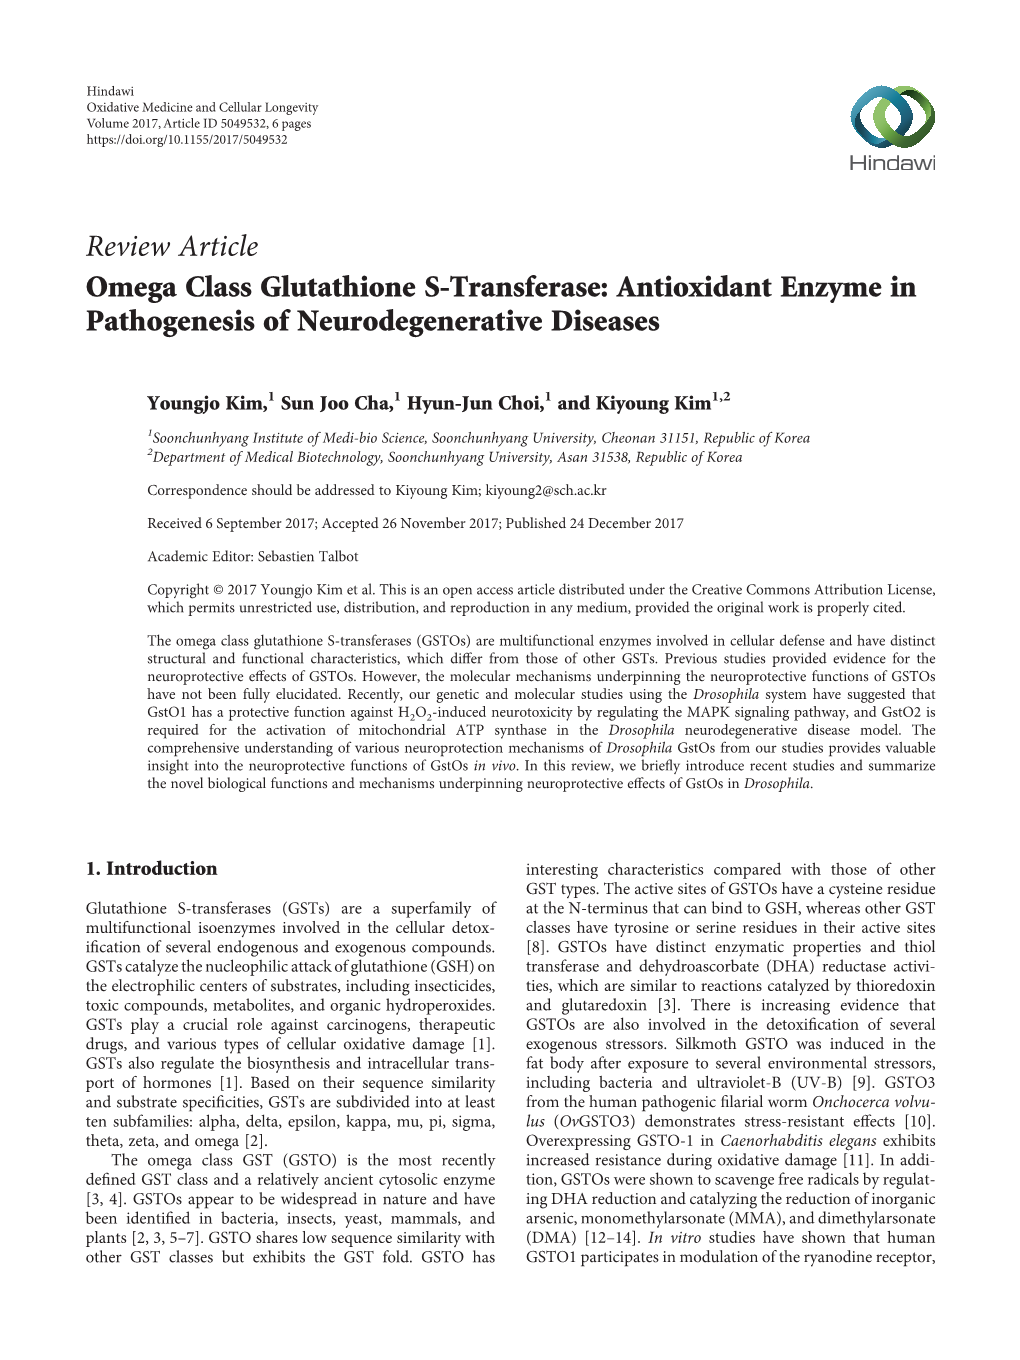 Omega Class Glutathione S-Transferase: Antioxidant Enzyme in Pathogenesis of Neurodegenerative Diseases